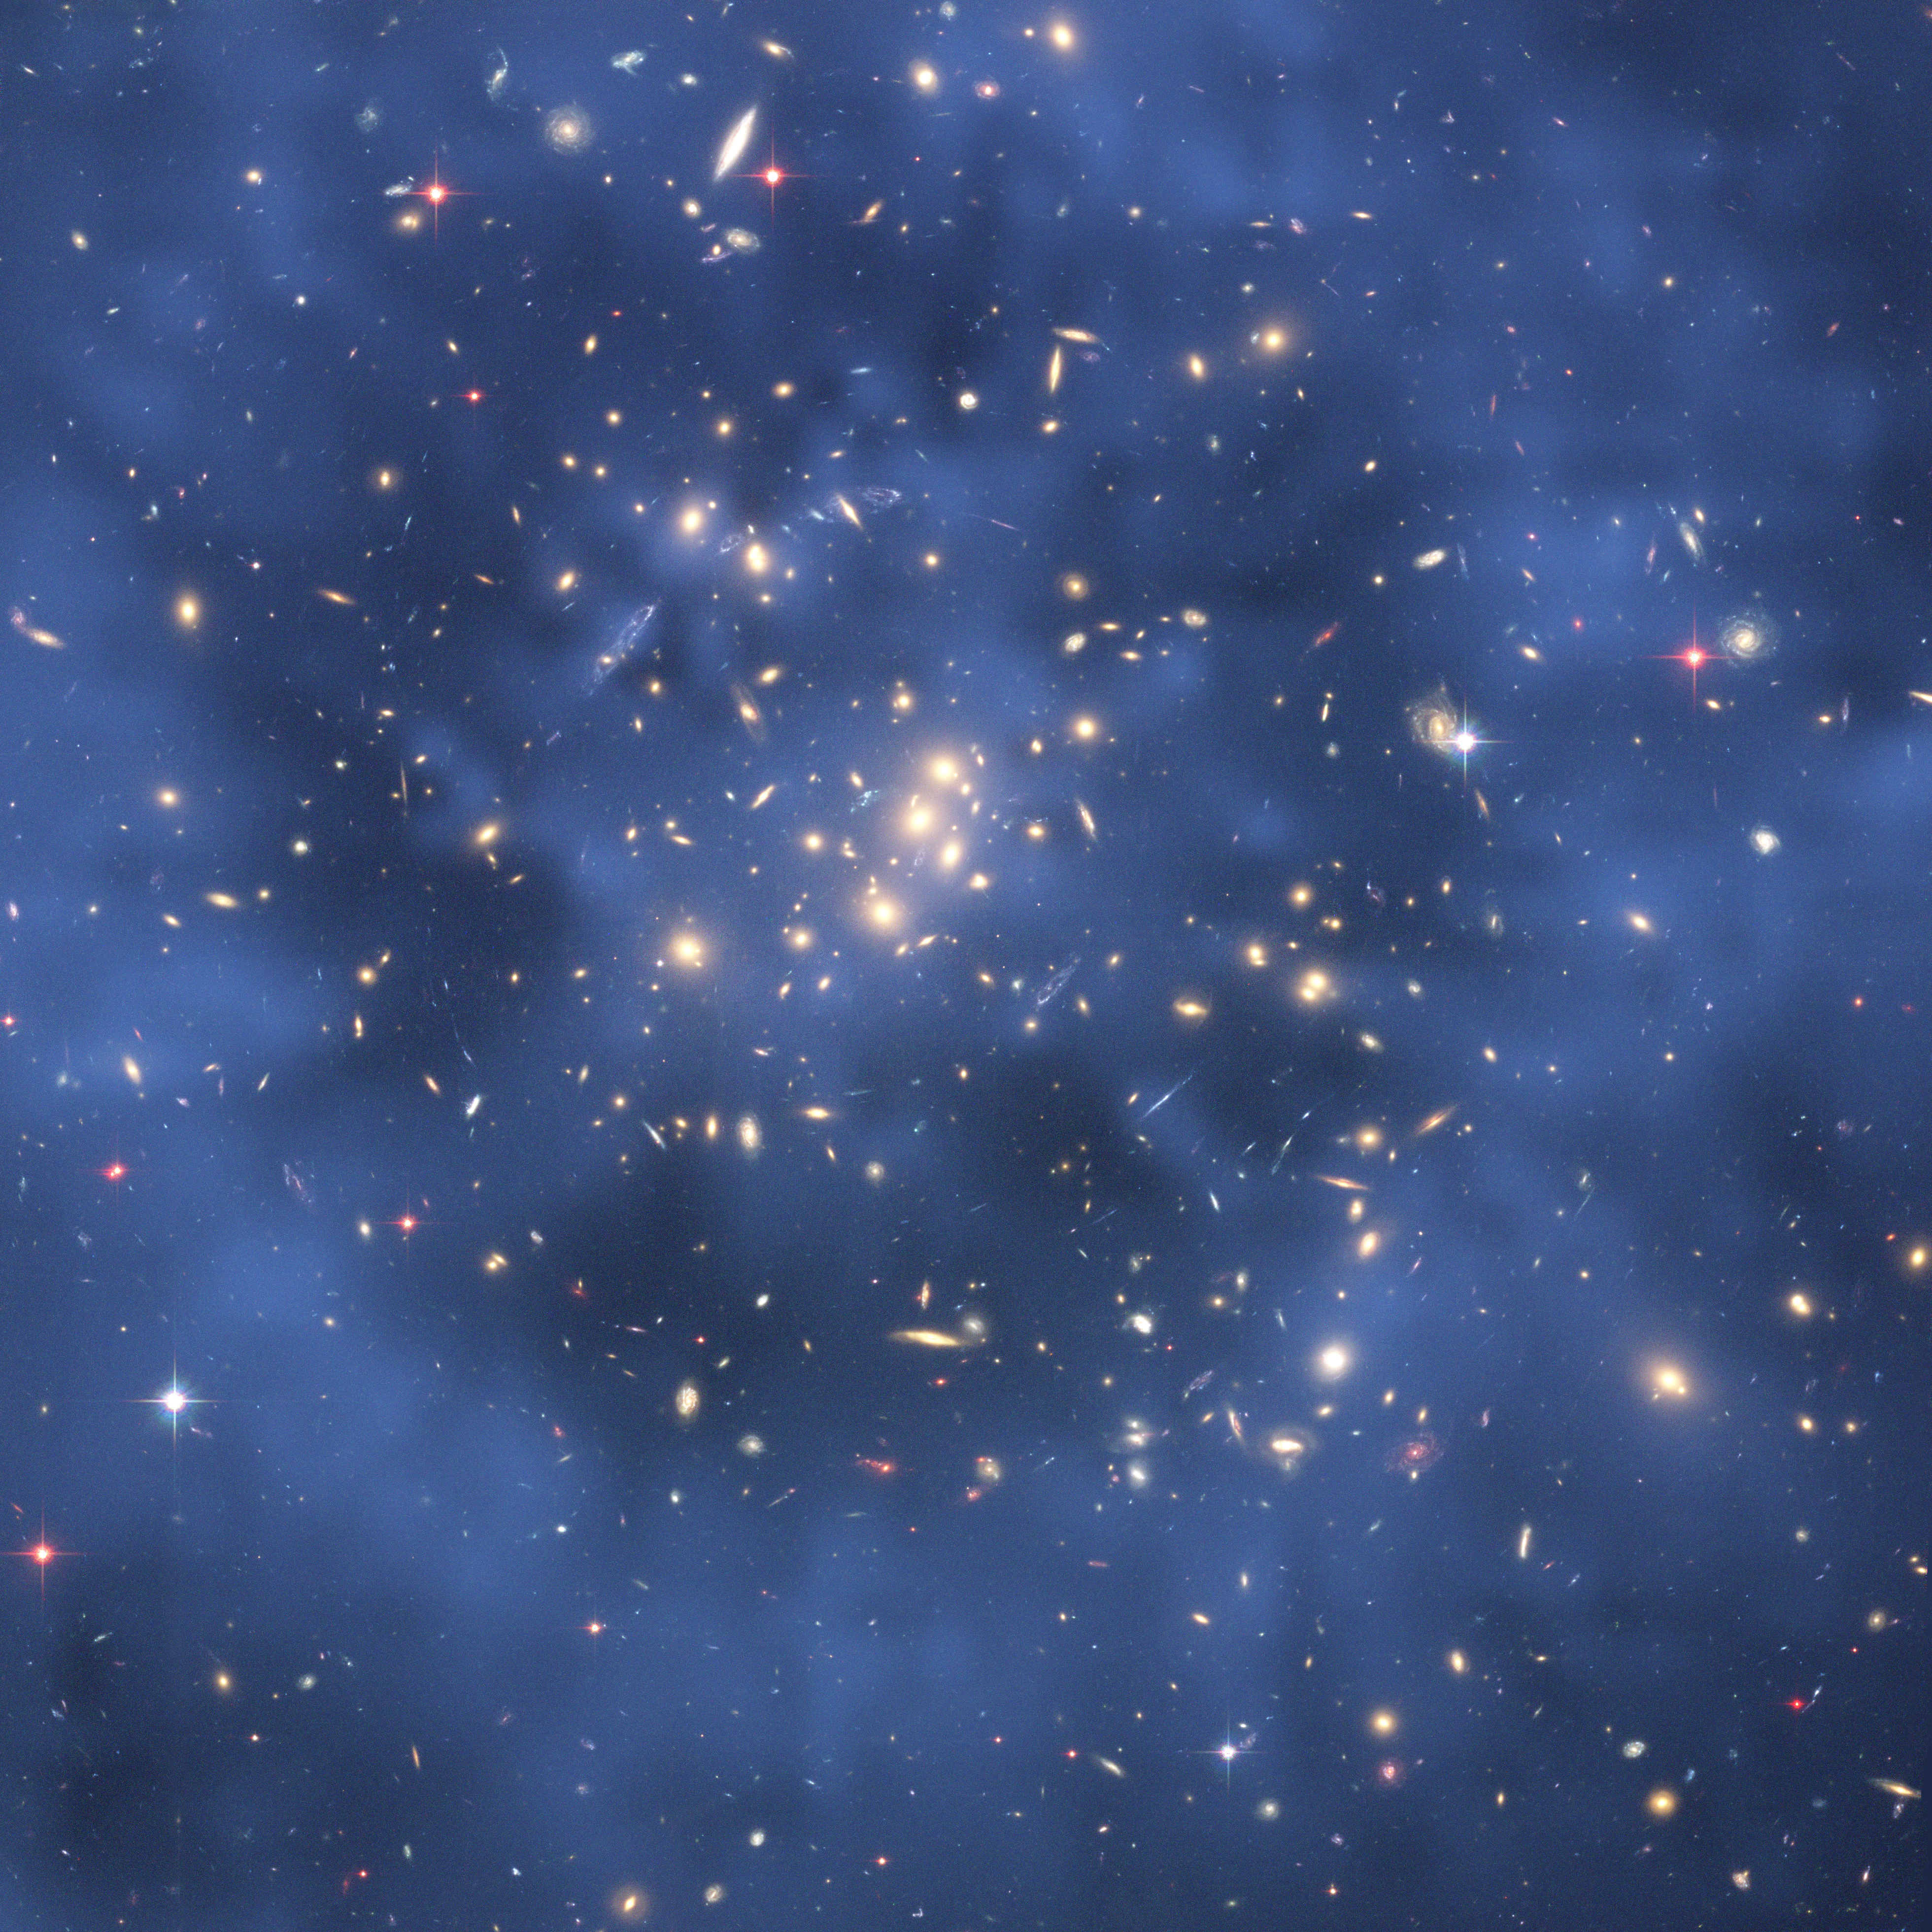 Dark matter galaxy image from hubble telescope.